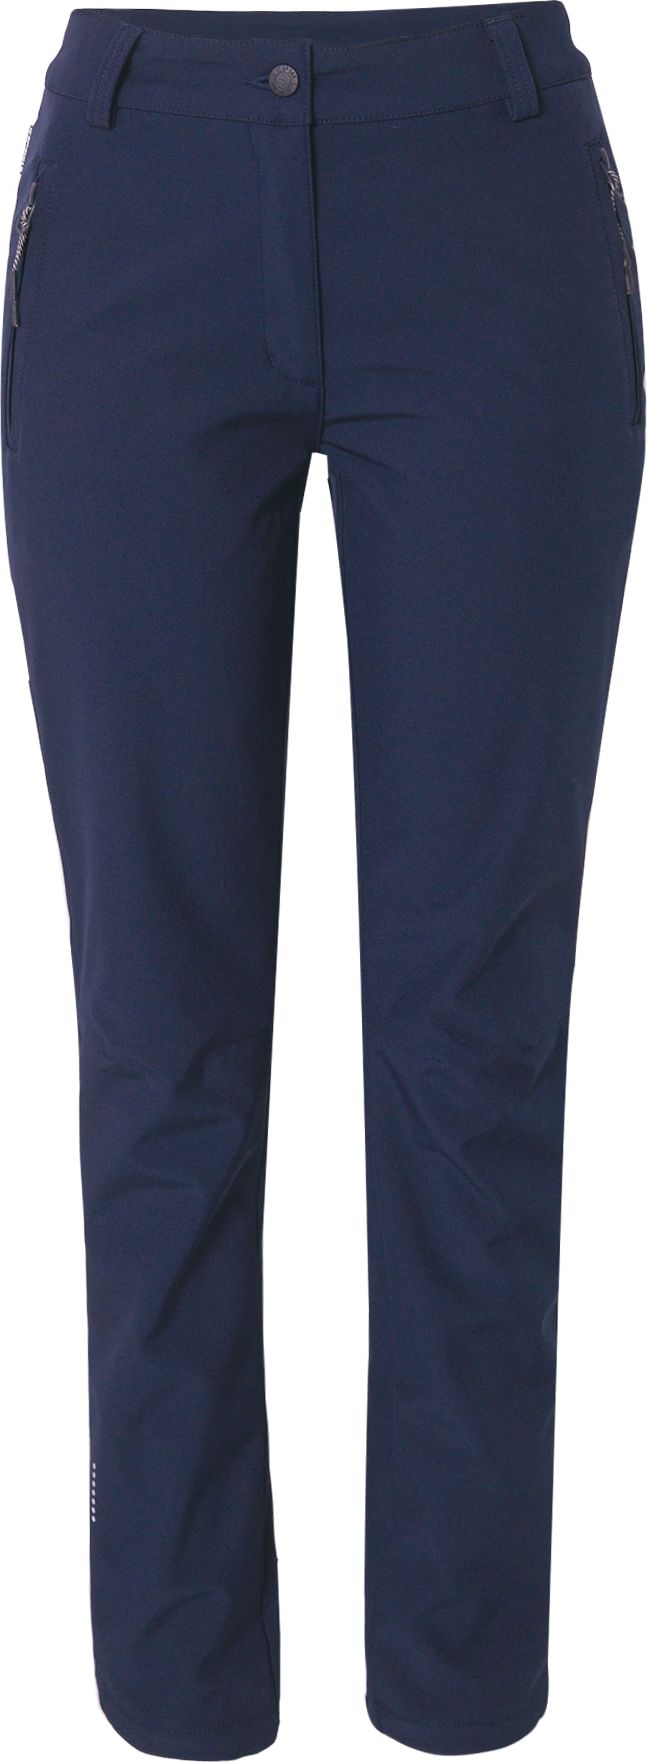 ICEPEAK Outdoorové kalhoty 'ARGONIA' marine modrá